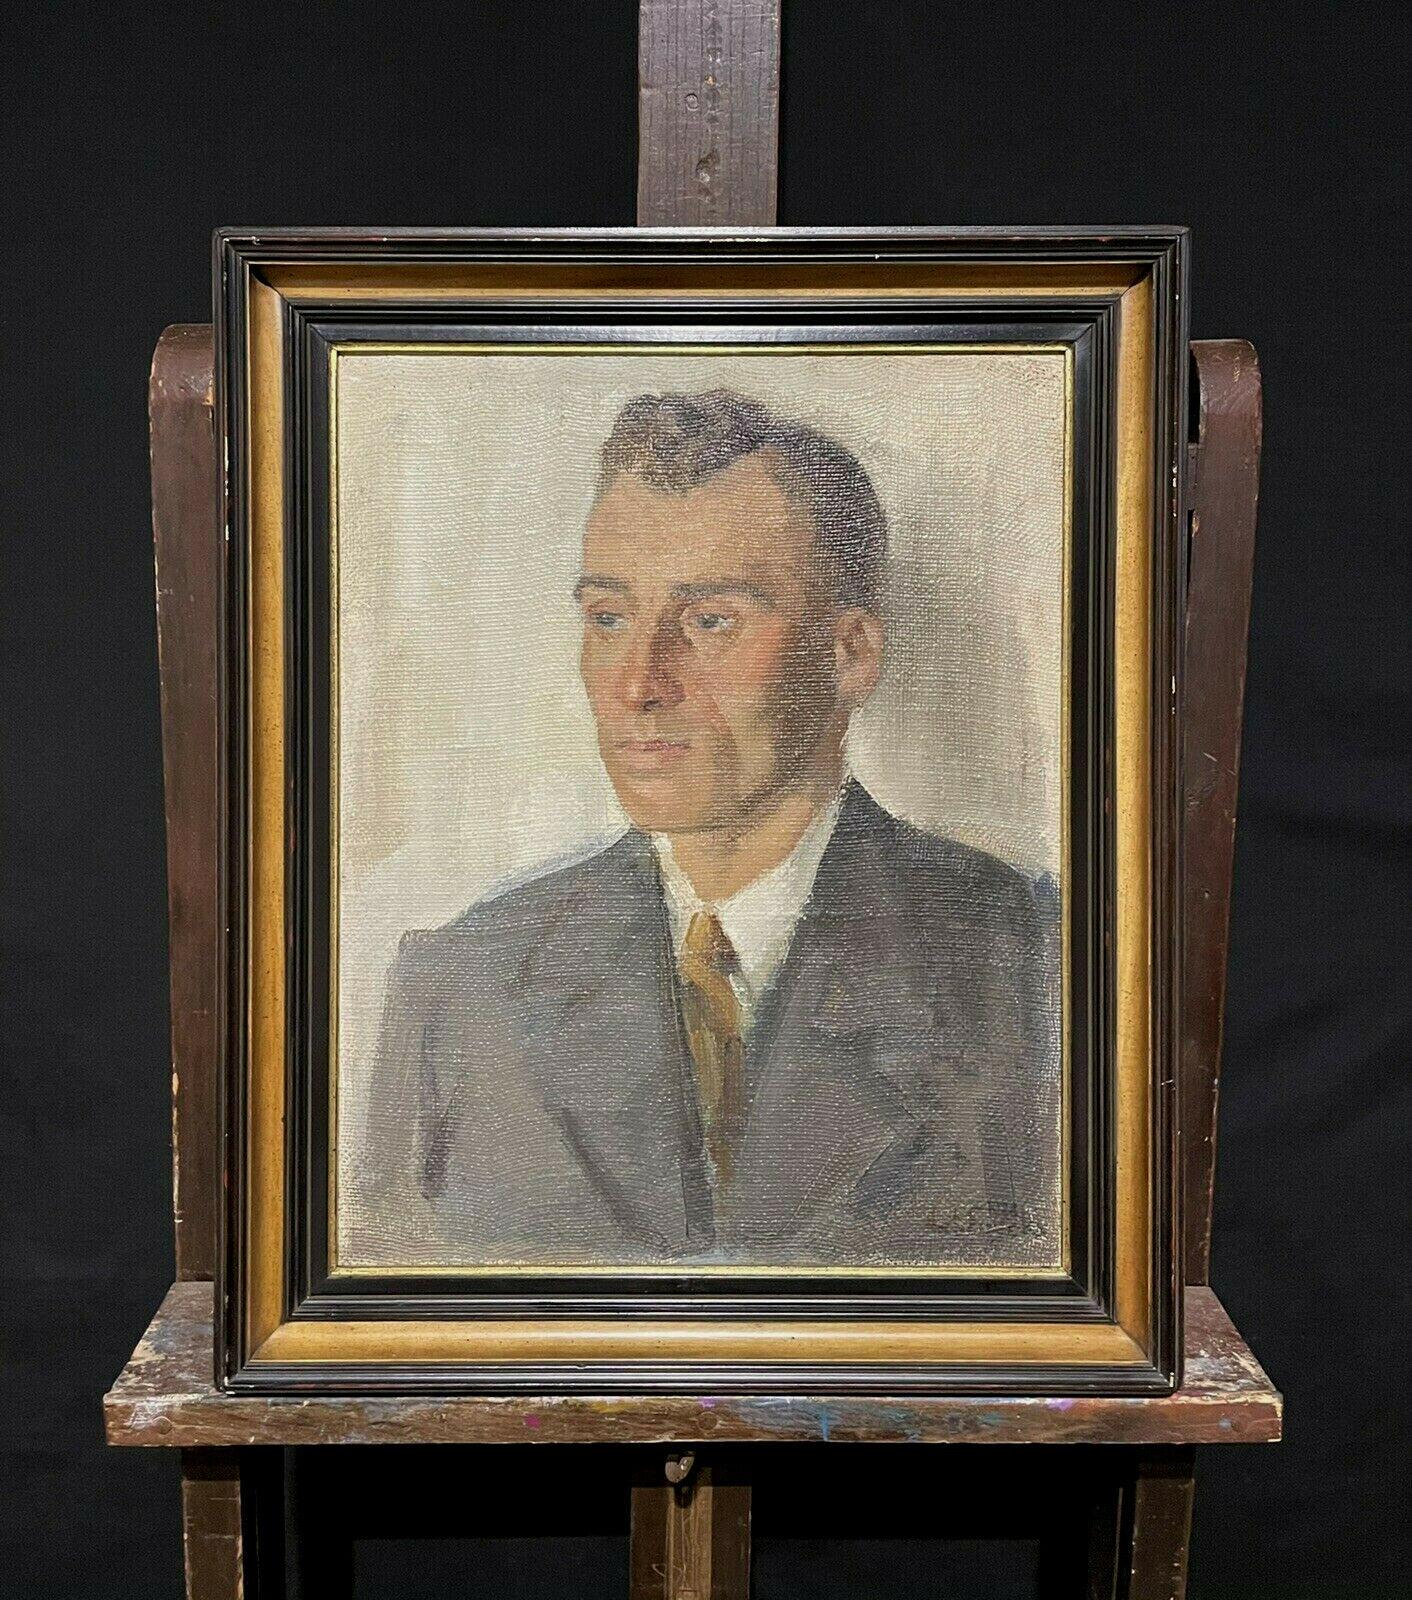 1940's BELGIAN POST-IMPRESSIONIST SIGNED OIL - PORTRAIT OF MAN IN JACKET & TIE - Painting by Belgian School